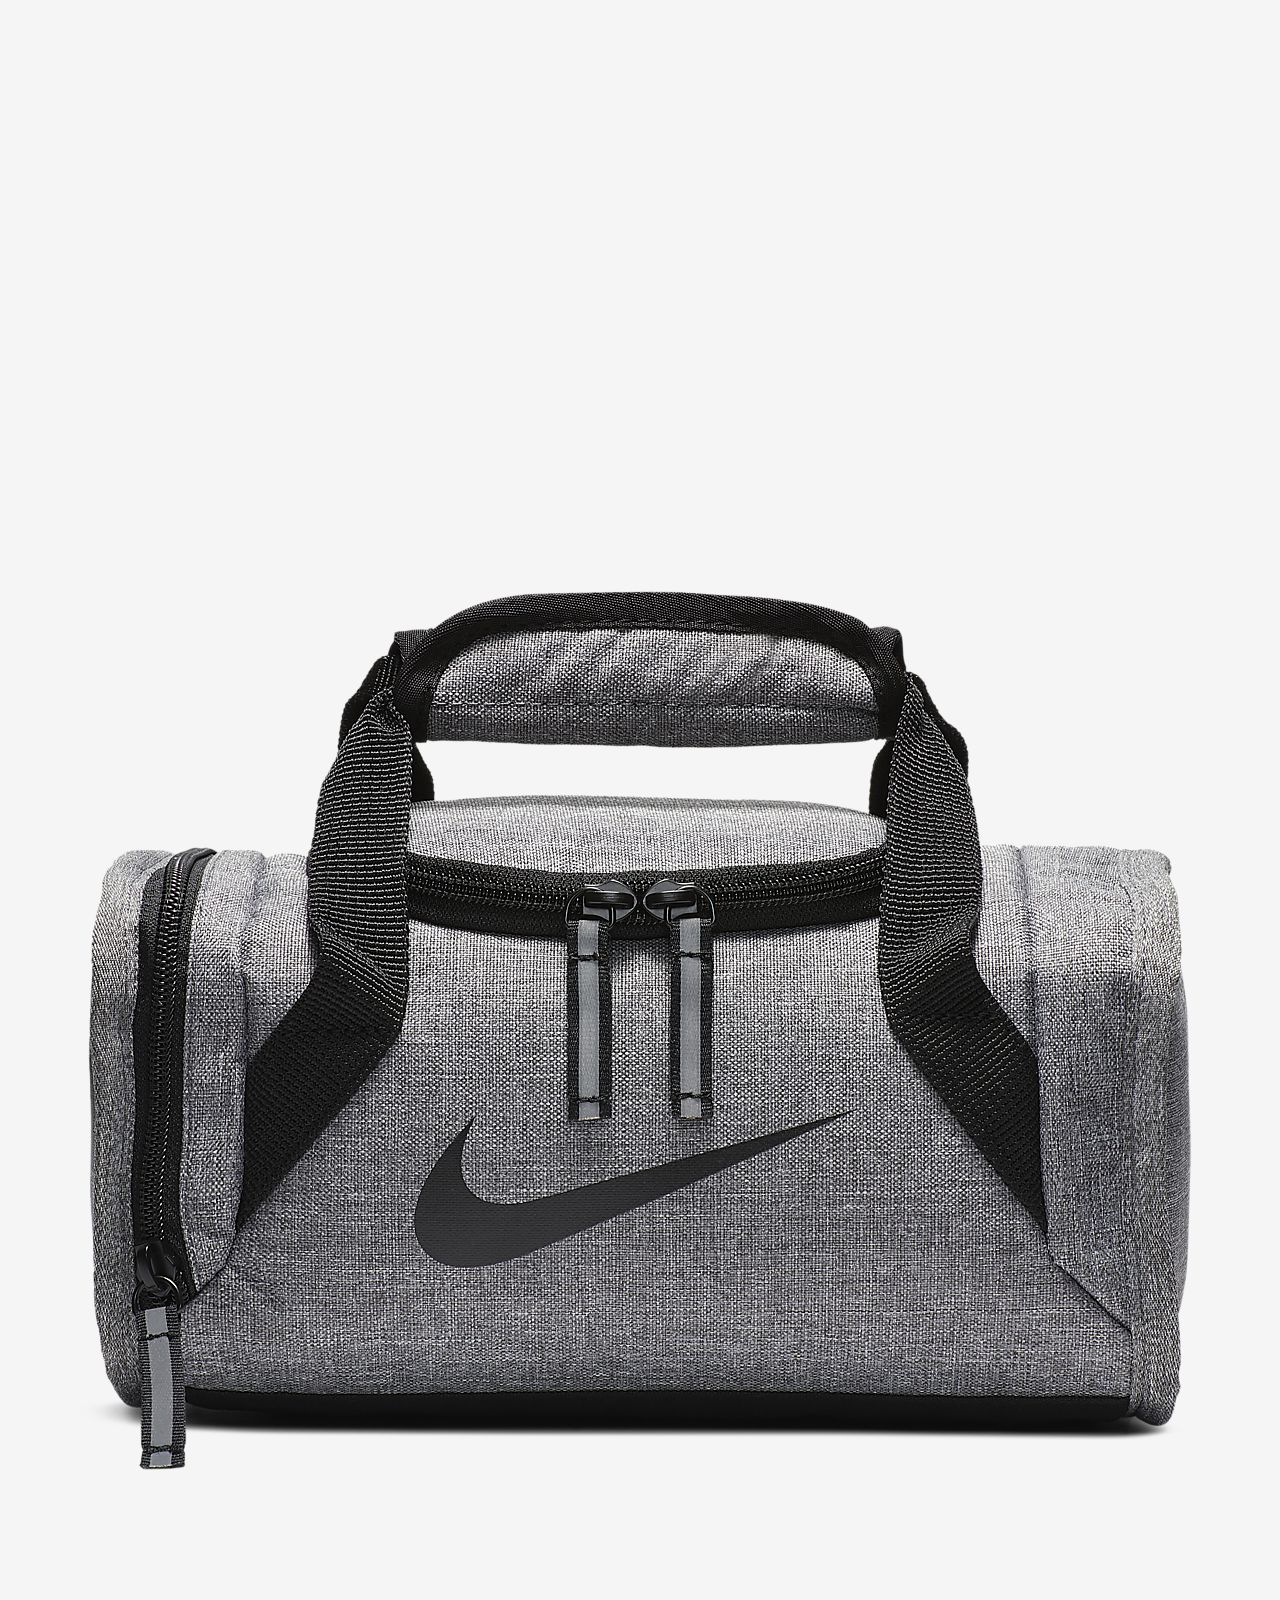 Nike Brasilia Fuel Pack Lunch Bag. Nike.com